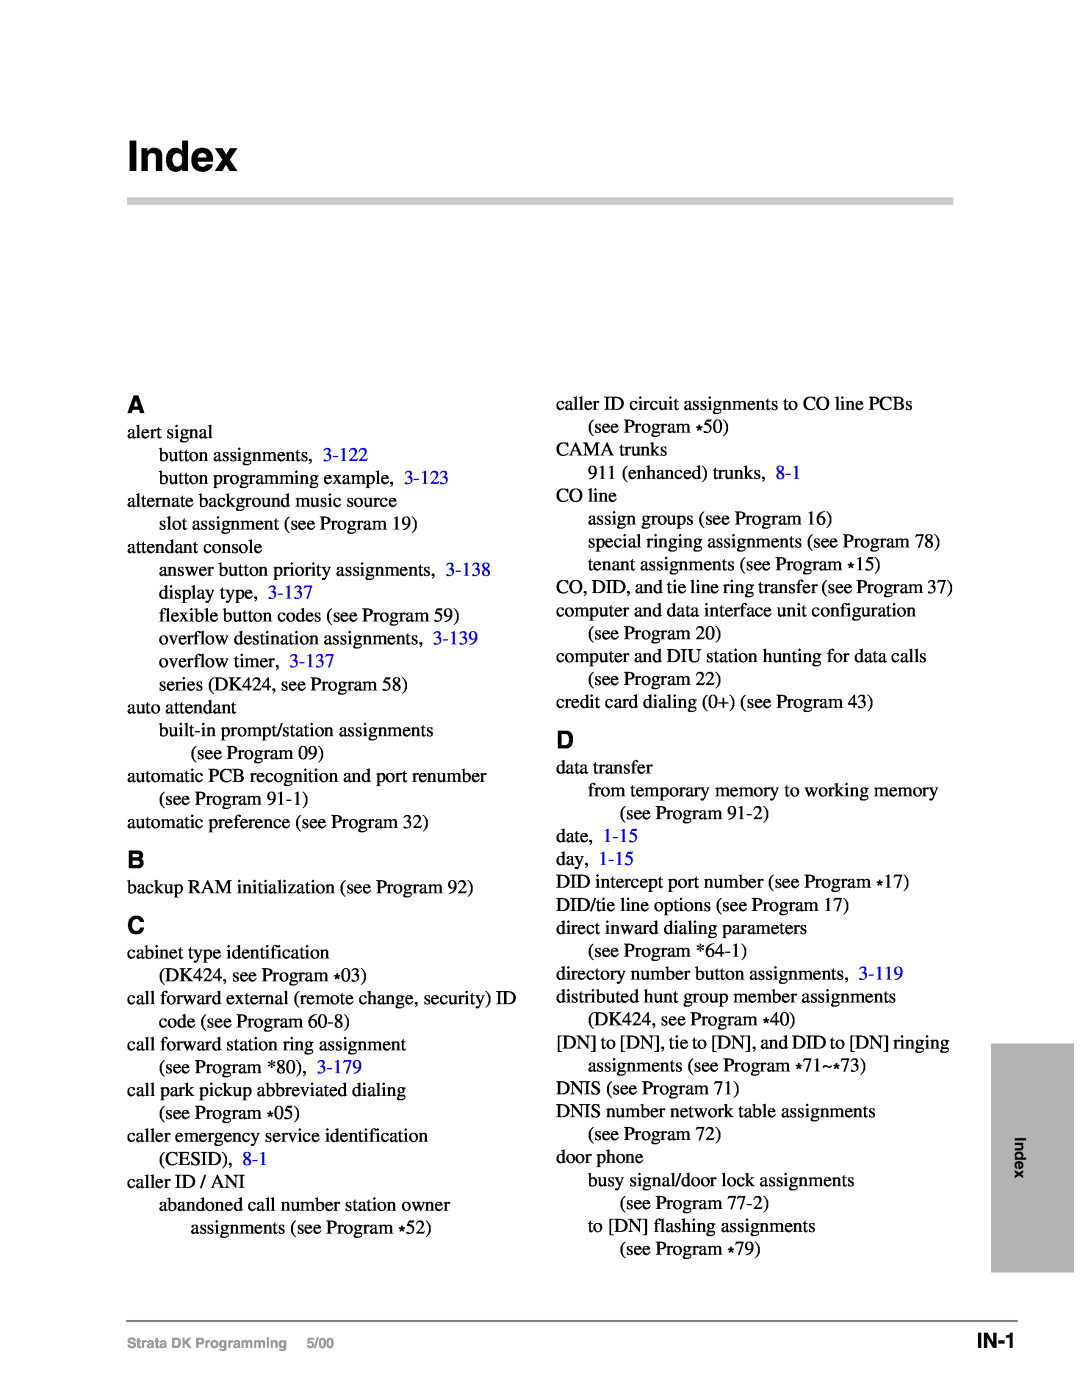 Toshiba dk14, DK40I, DK424I manual Index, IN-1 